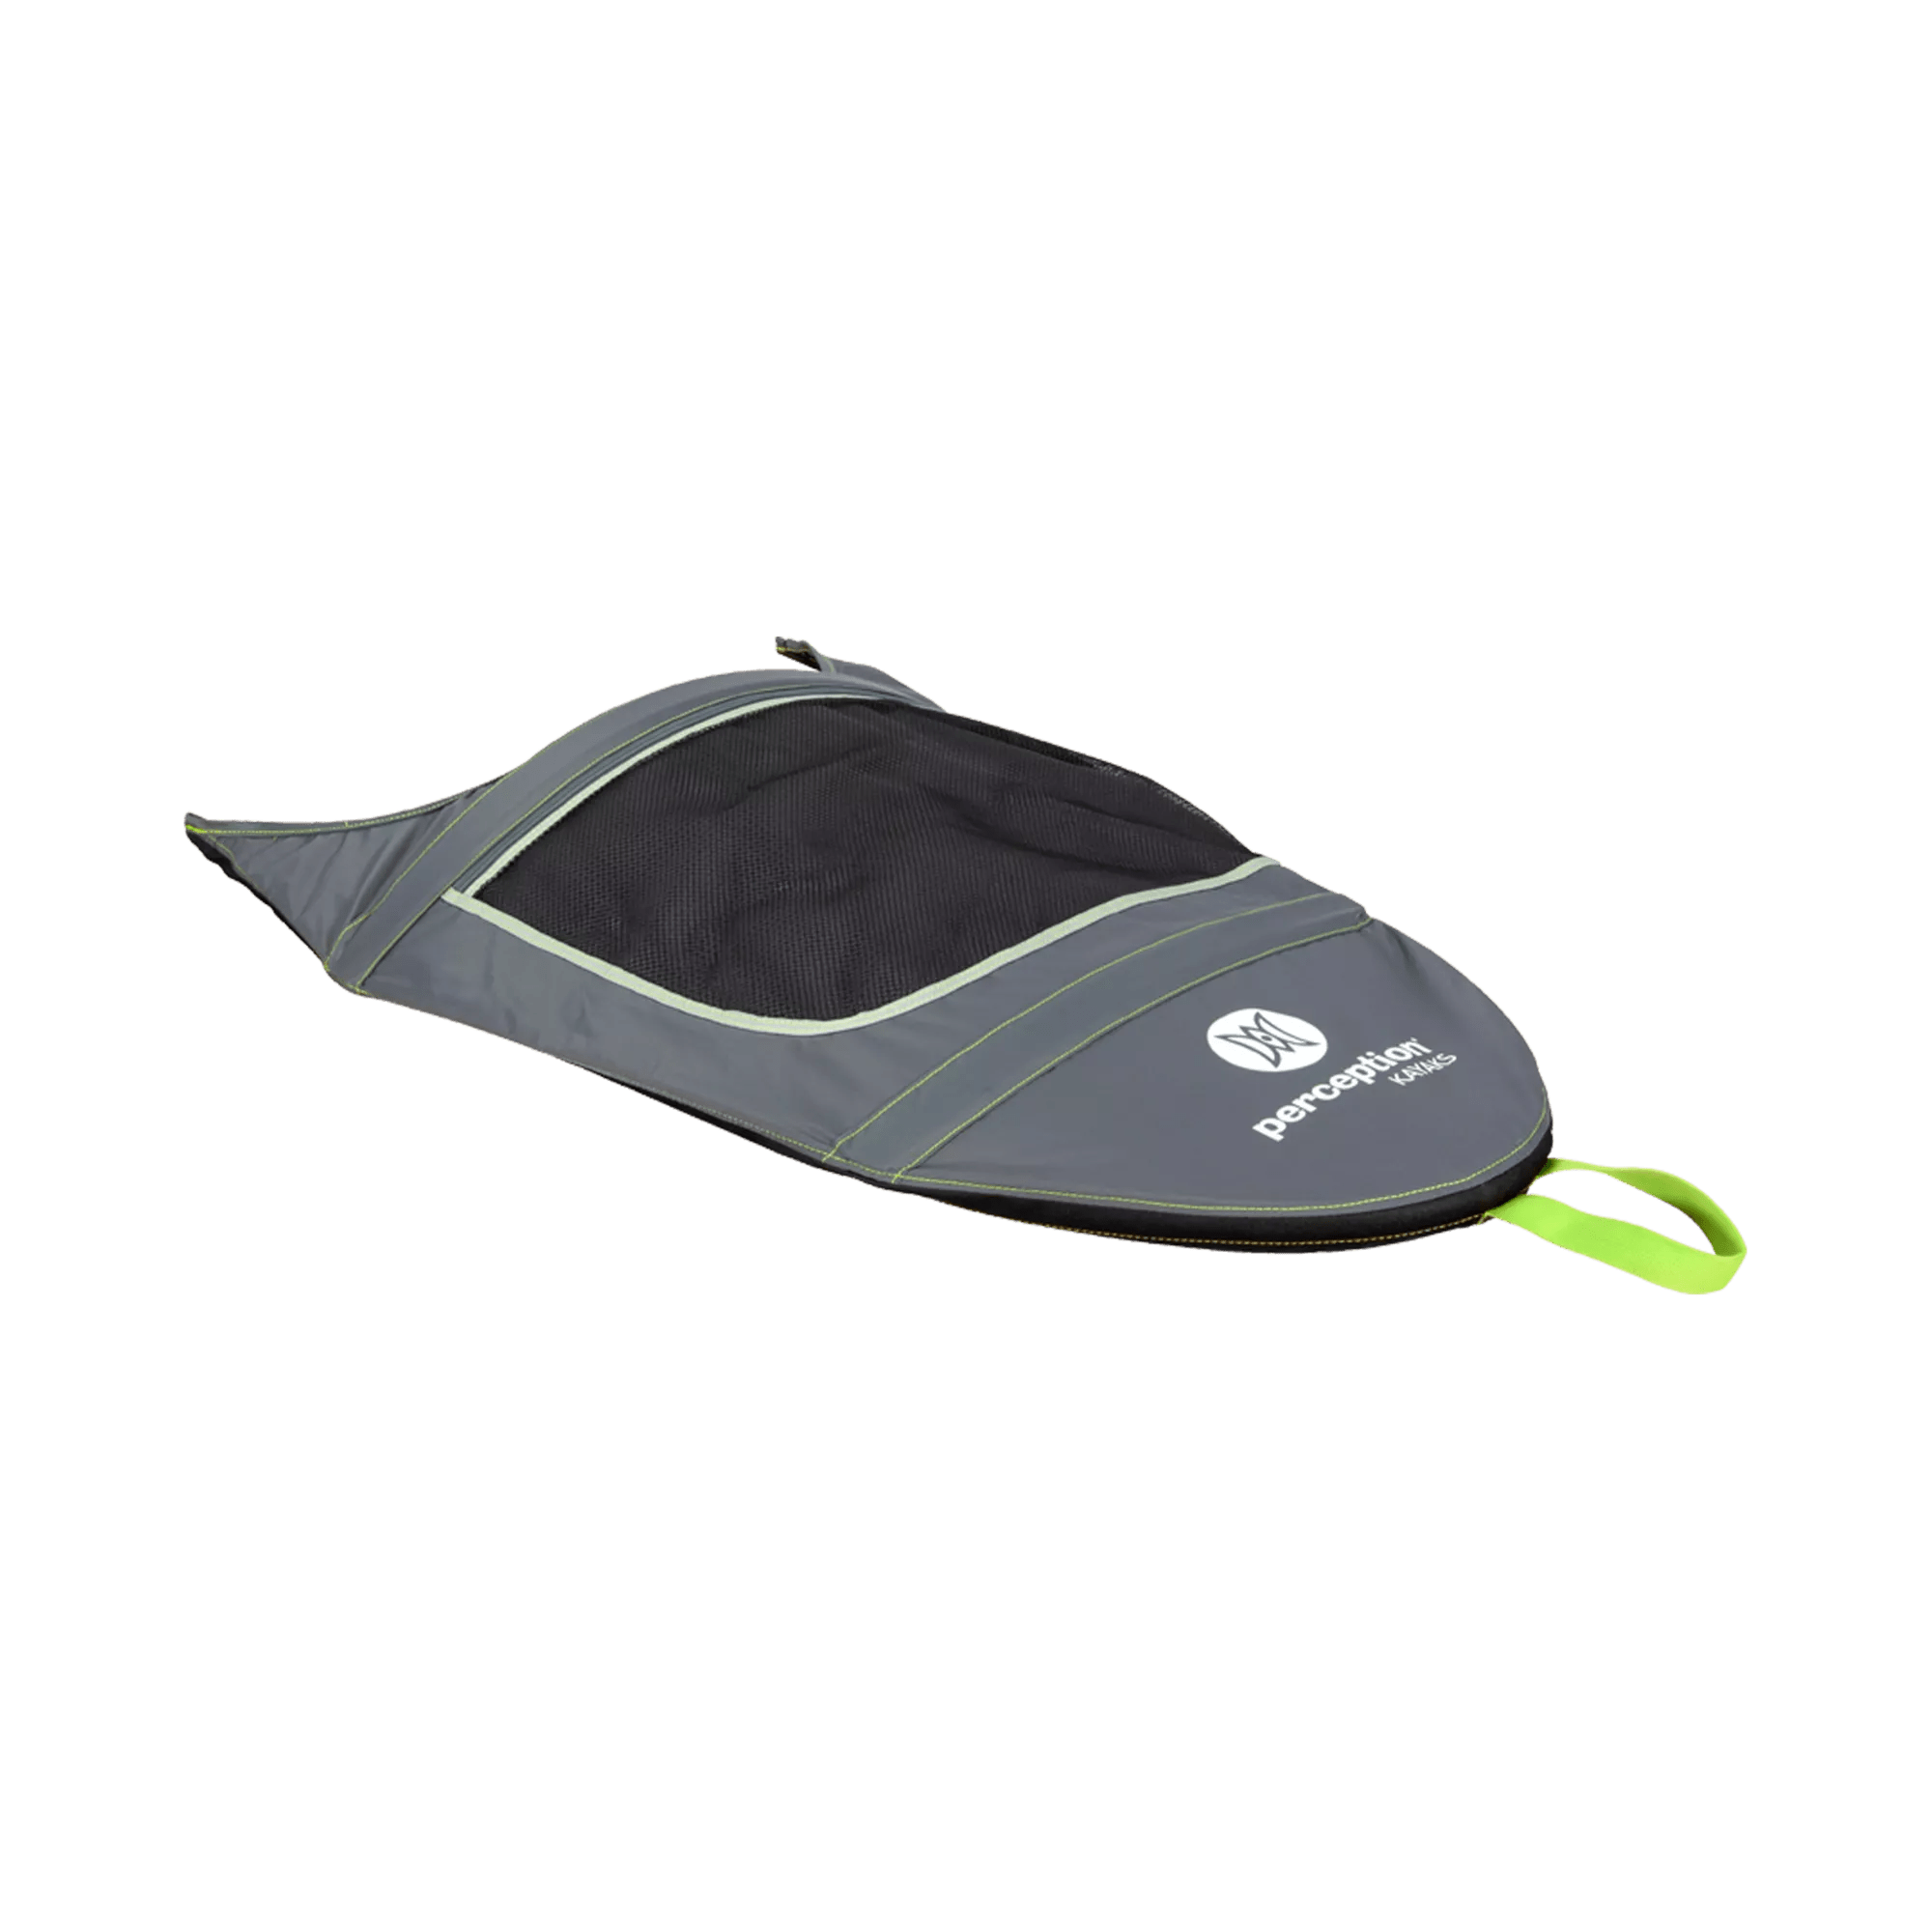 PERCEPTION - TrueFit Kayak Sun Shield for Sit-In Kayaks - Size P12-P13 - Green - 8080060 - ISO 